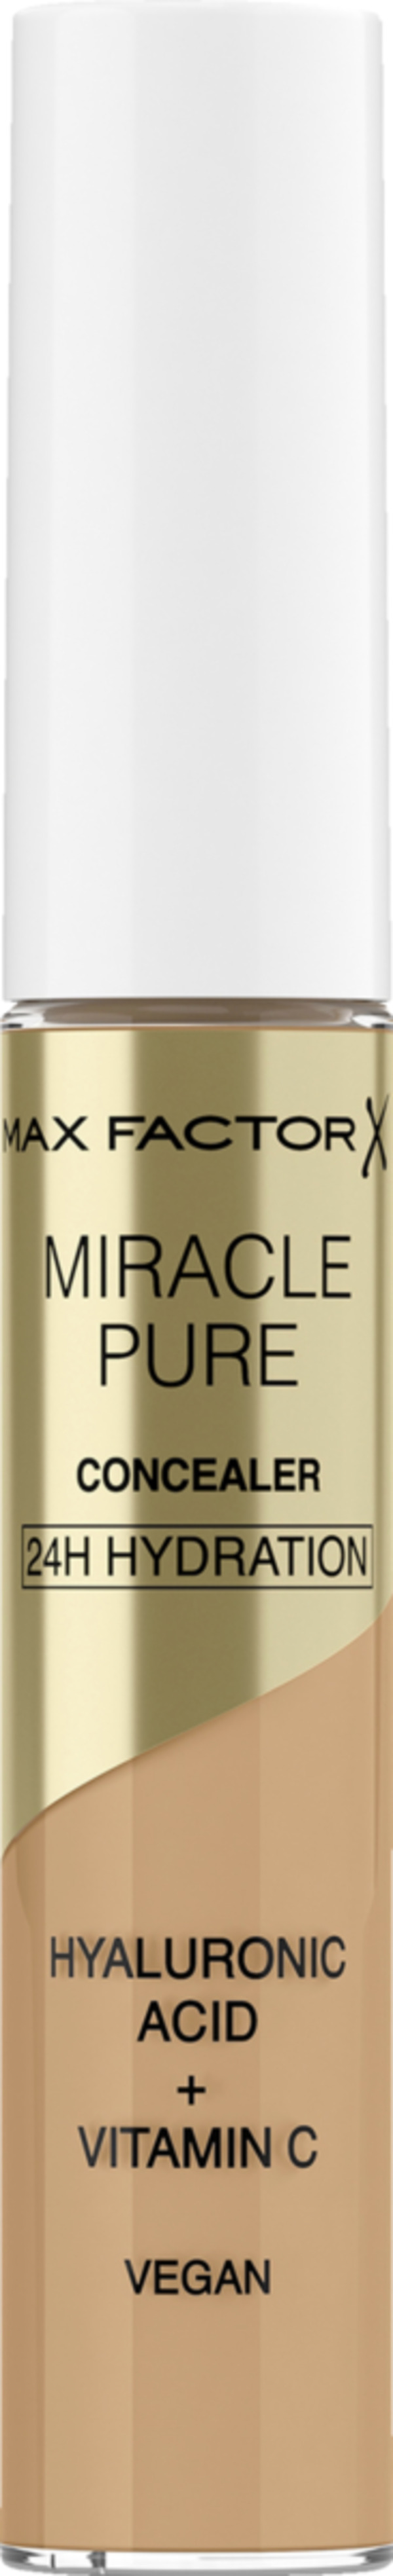 Bild 1 von Max Factor Miracle Pure Concealer, Fb 04